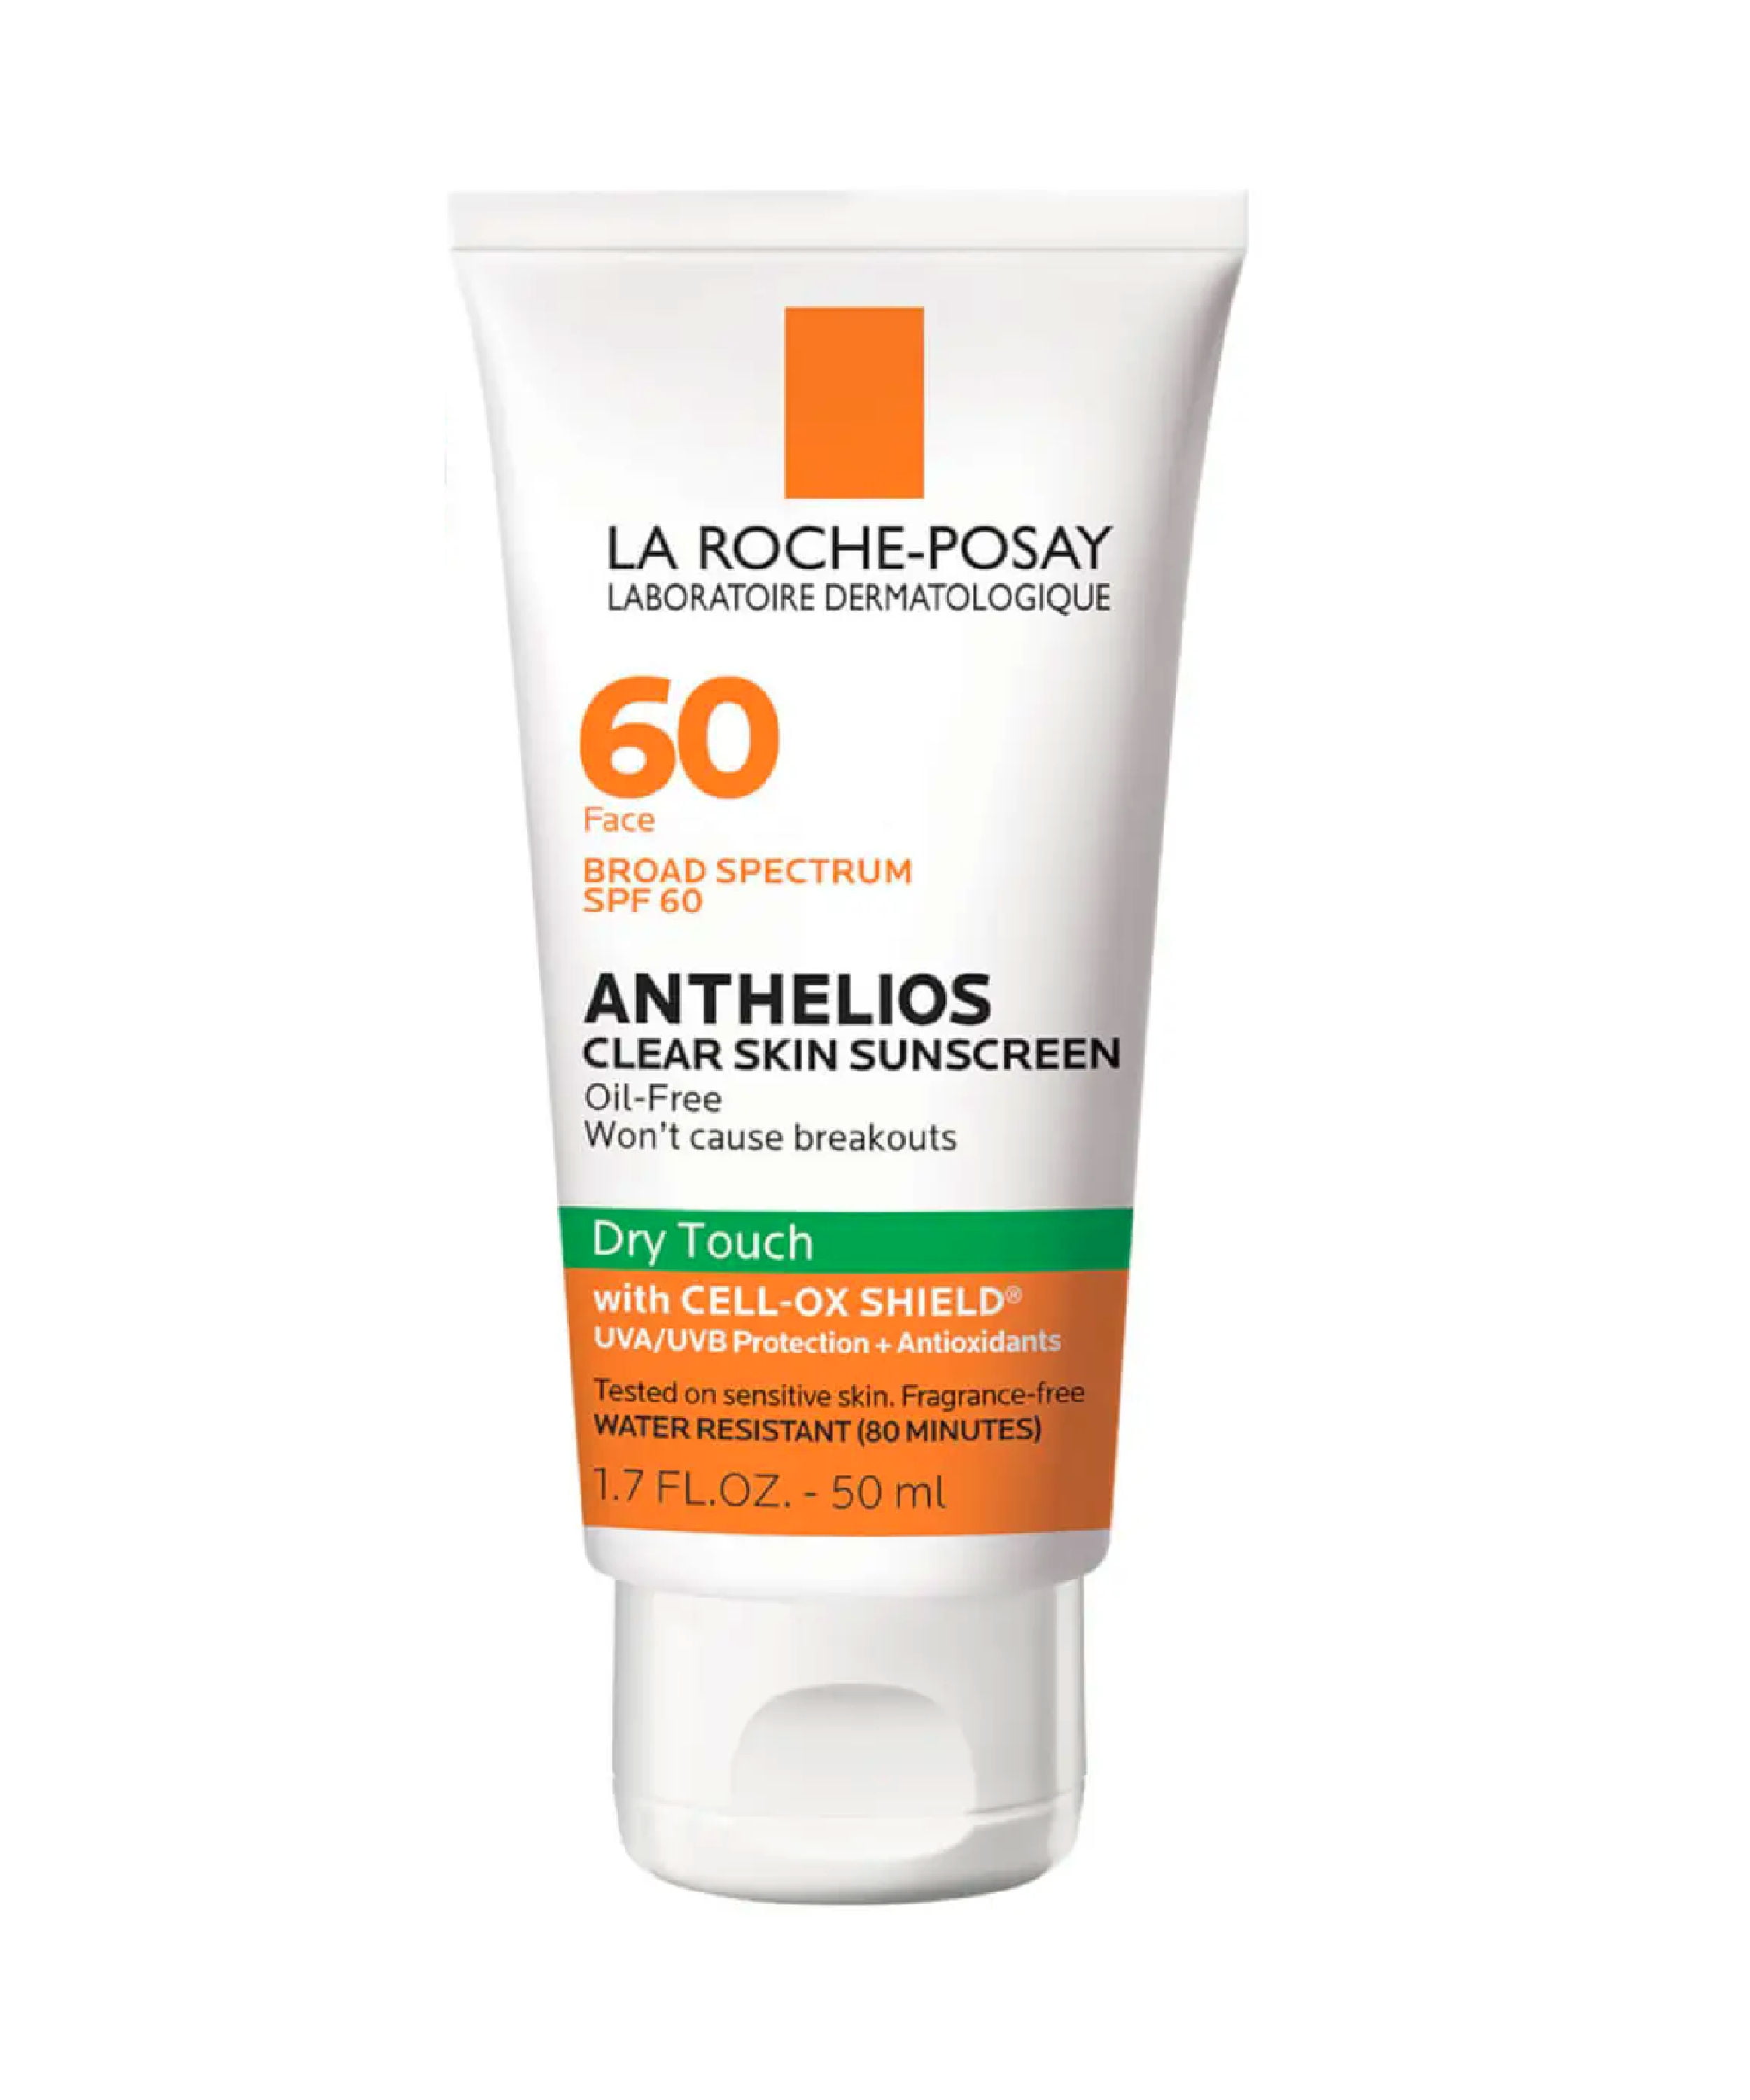 Mattifying Sunscreen Gel for Oily Sensitive Skin SPF 50+ - La Roche-Posay  Anthelios Gel-Cream